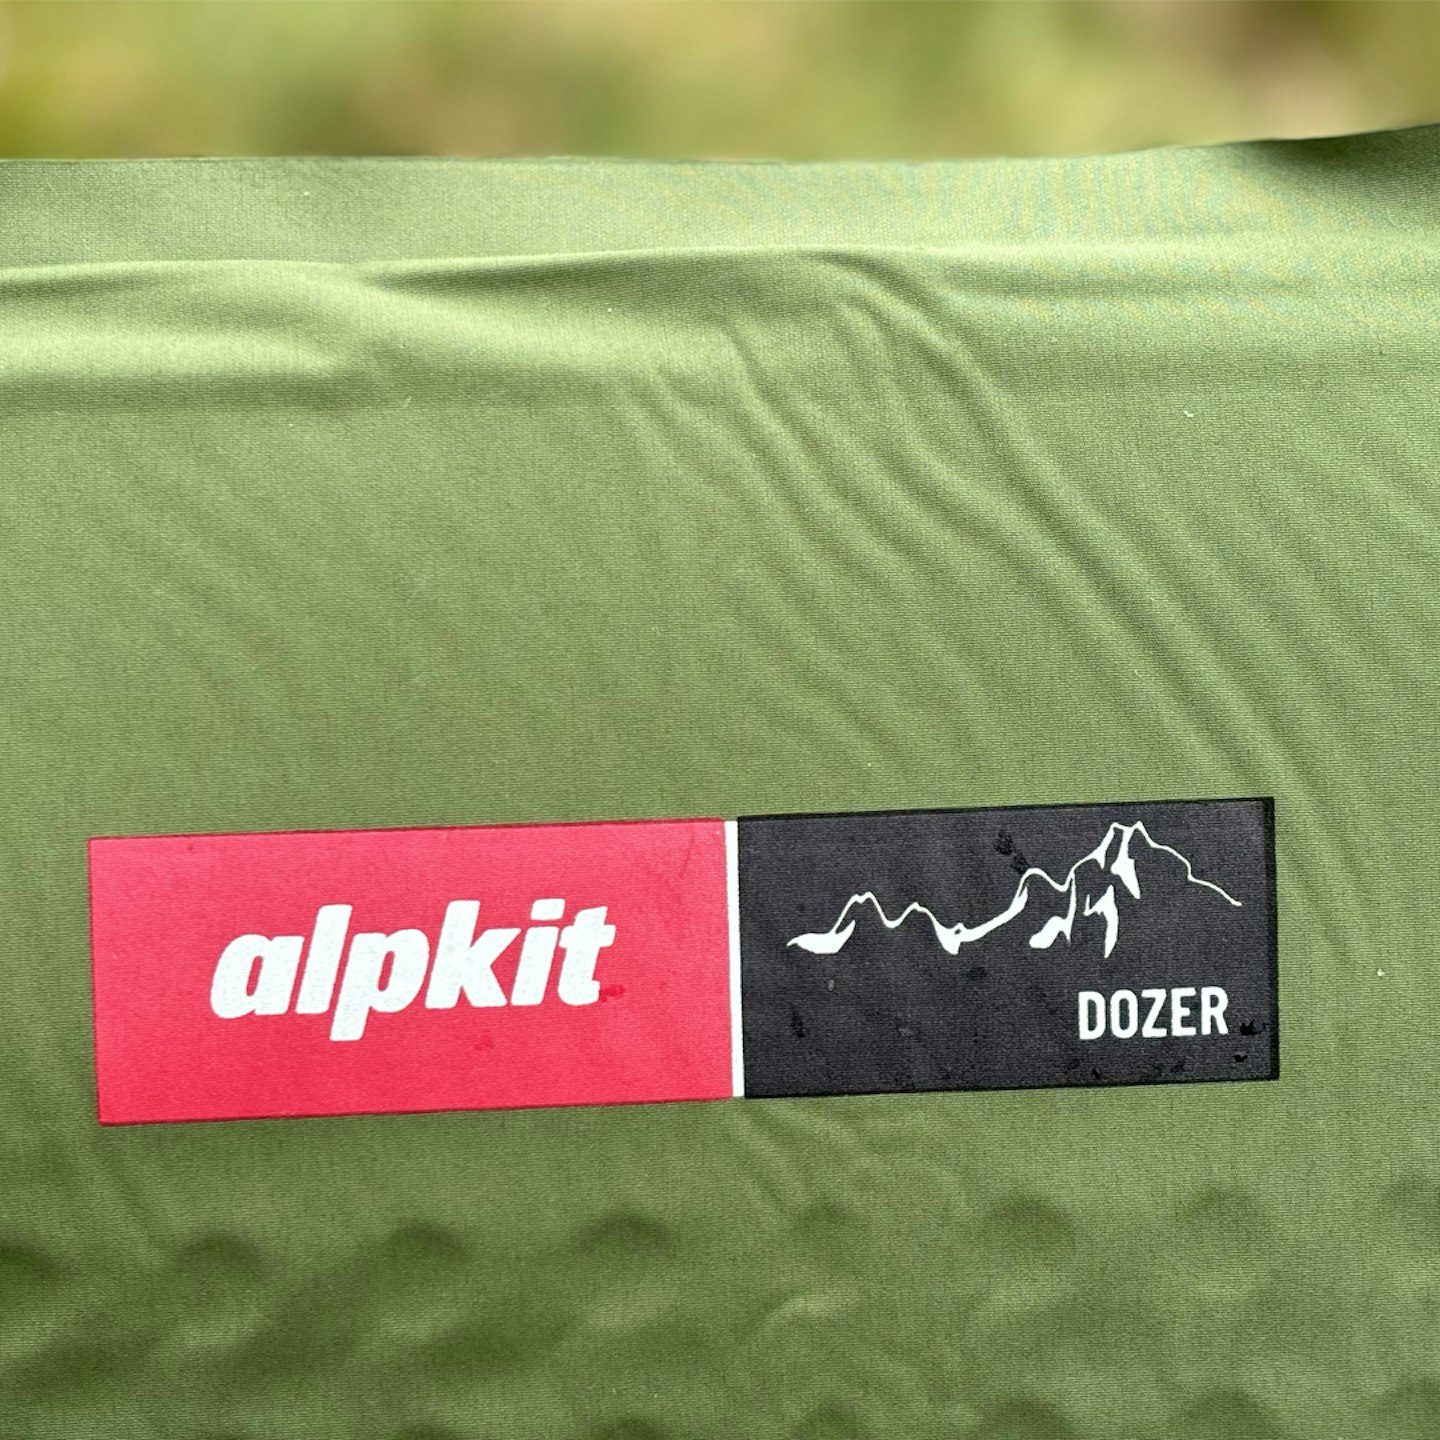 Alpkit Dozer camping mattress logo print